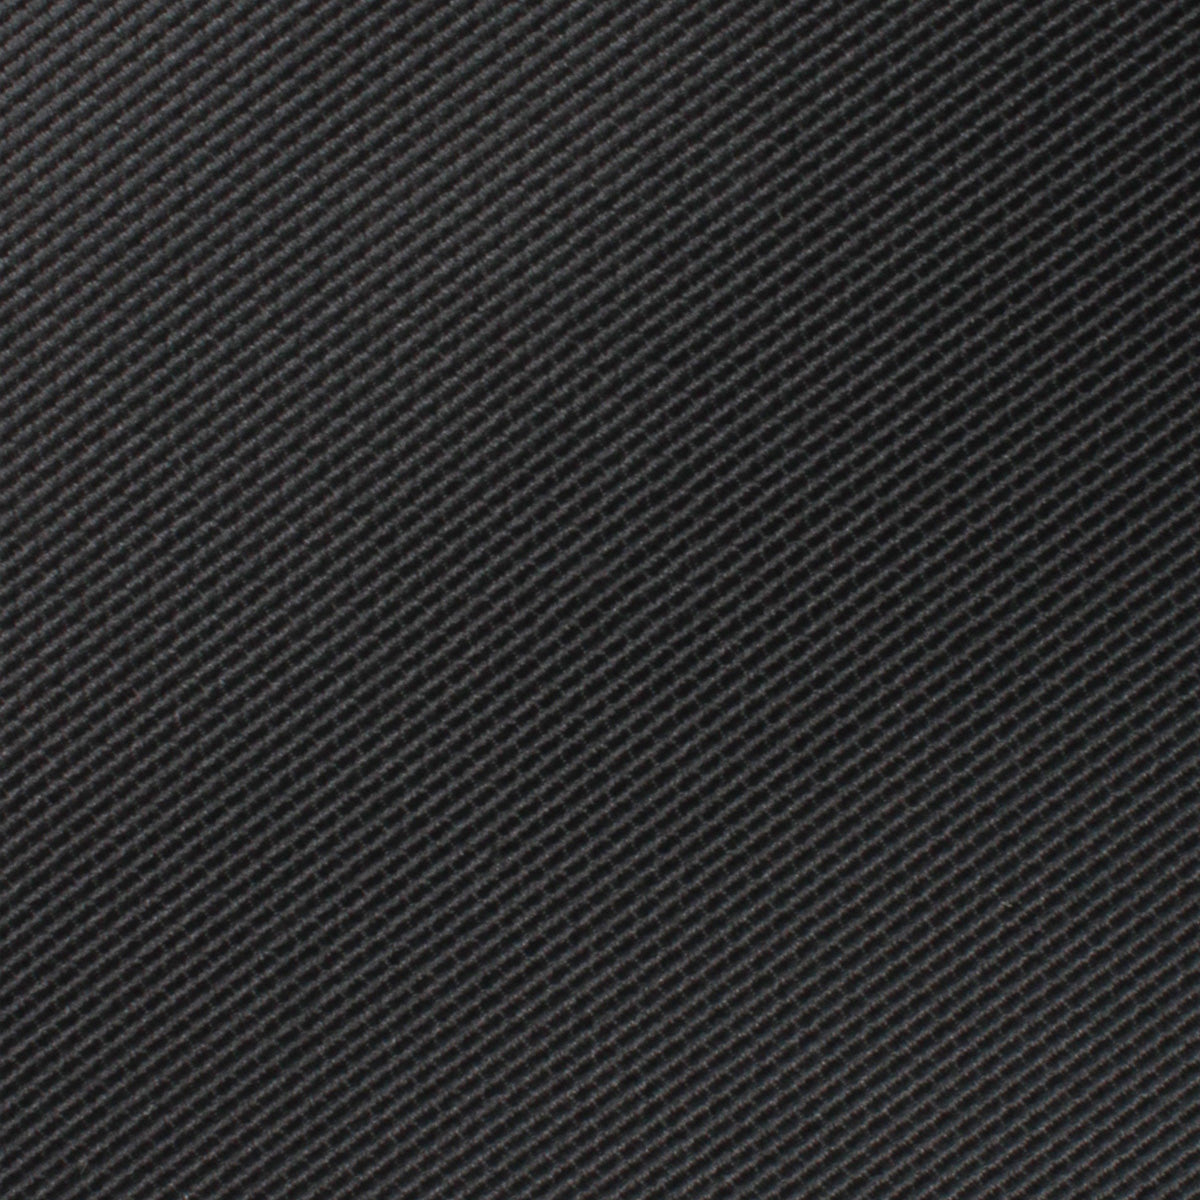 Black Weave Bow Tie Fabric